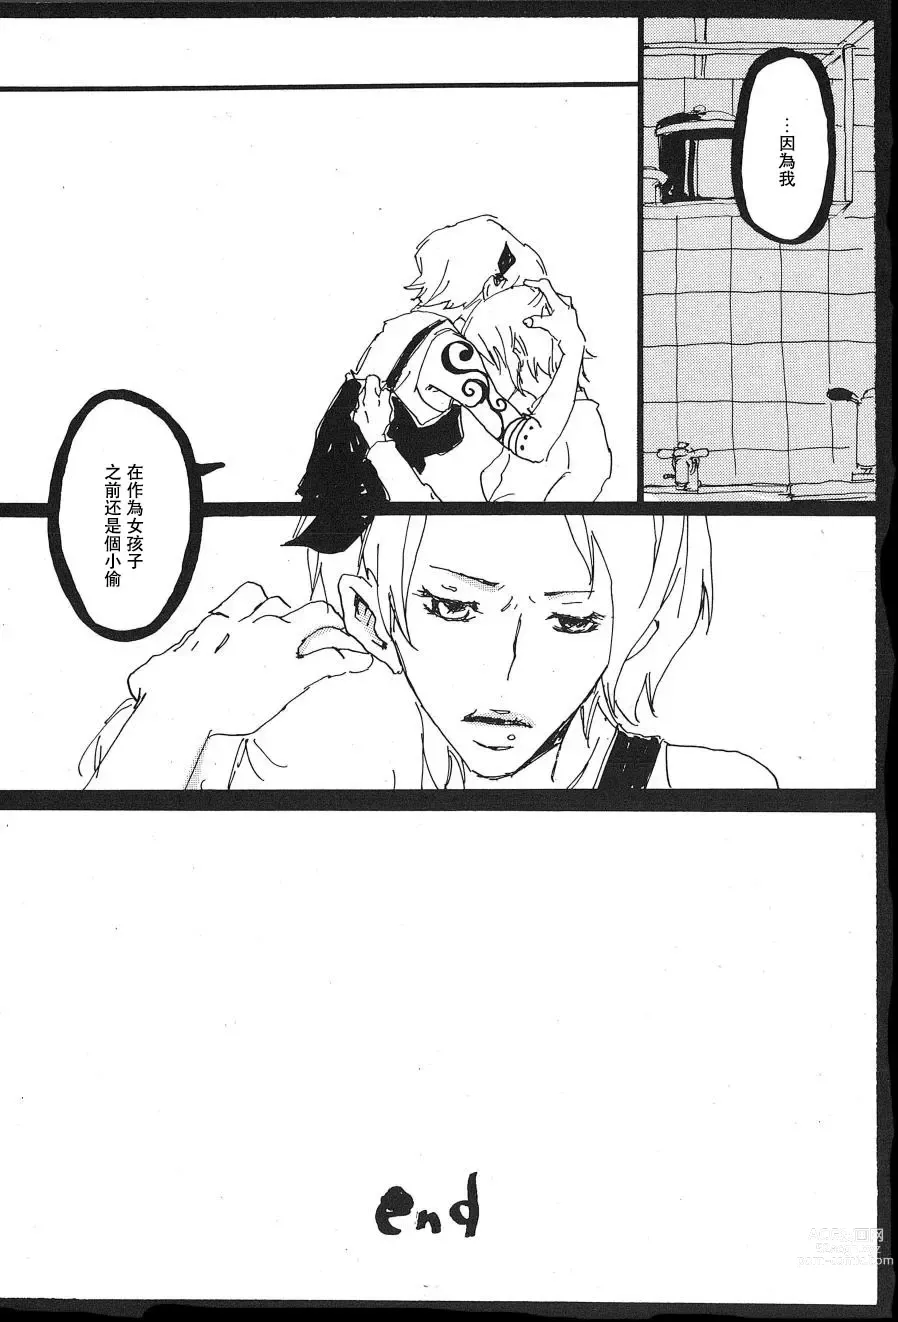 Page 53 of doujinshi 日光菊